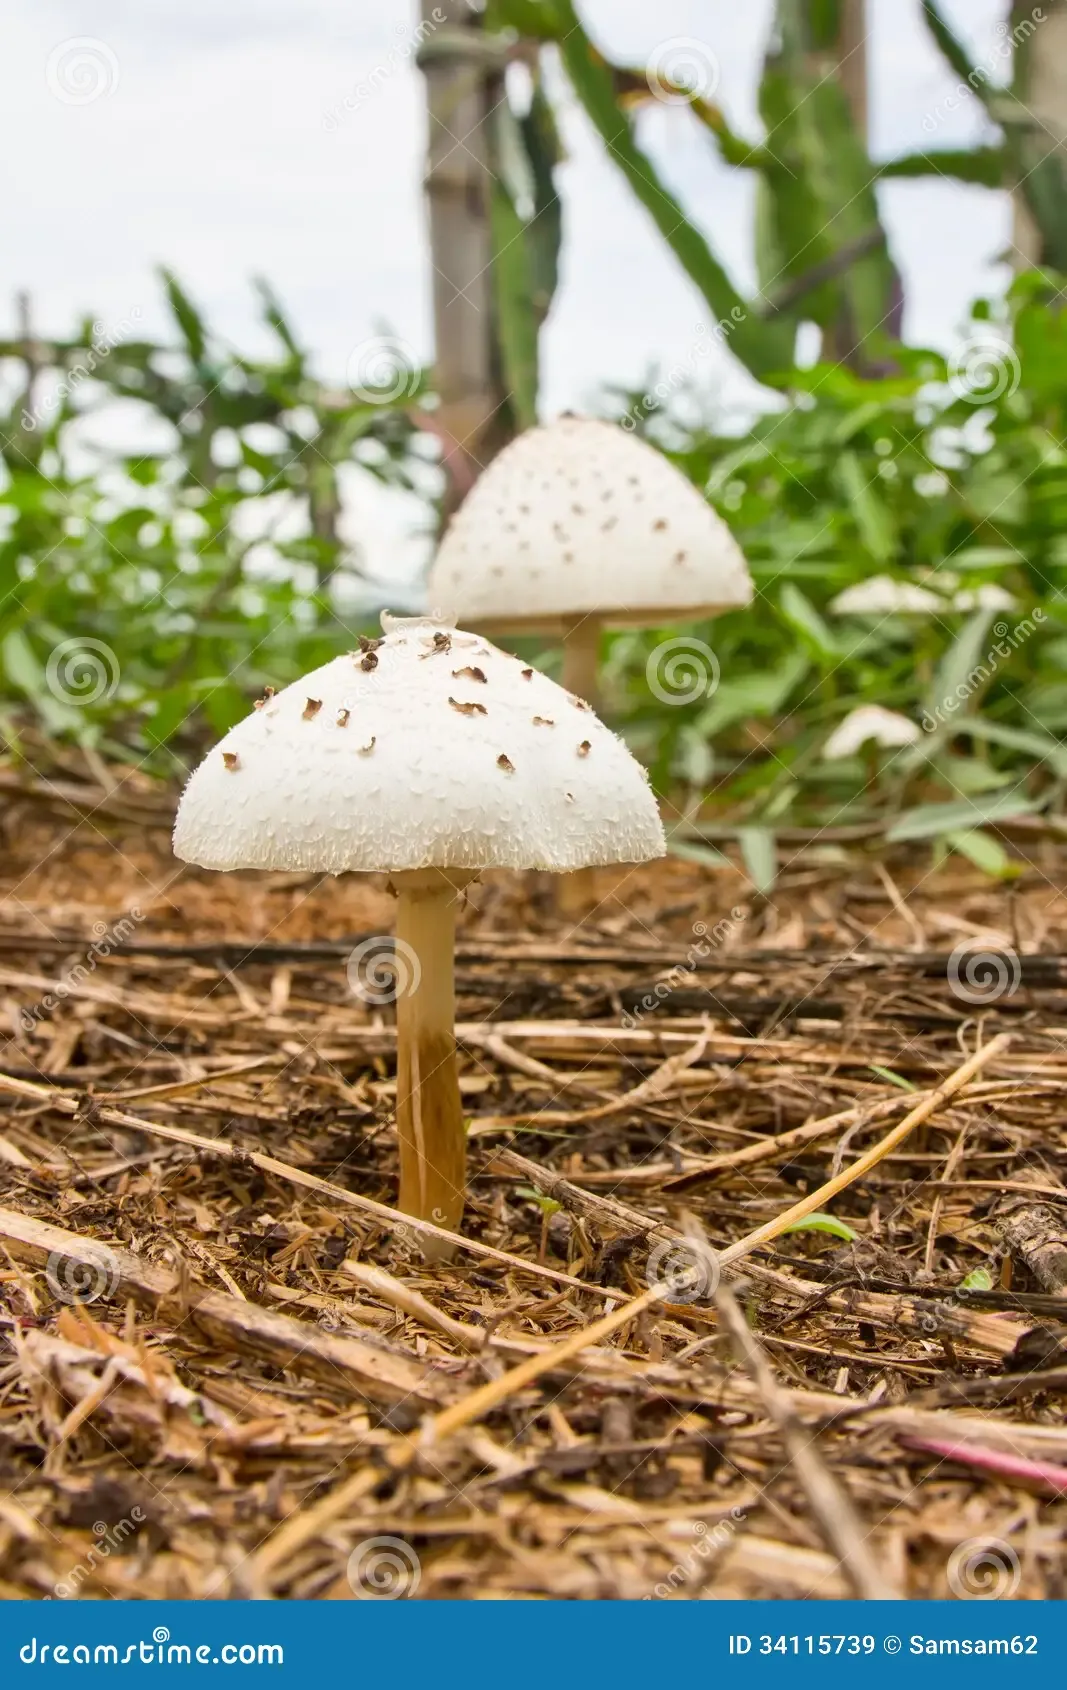 wild-mushrooms-ground-34115739.jpg